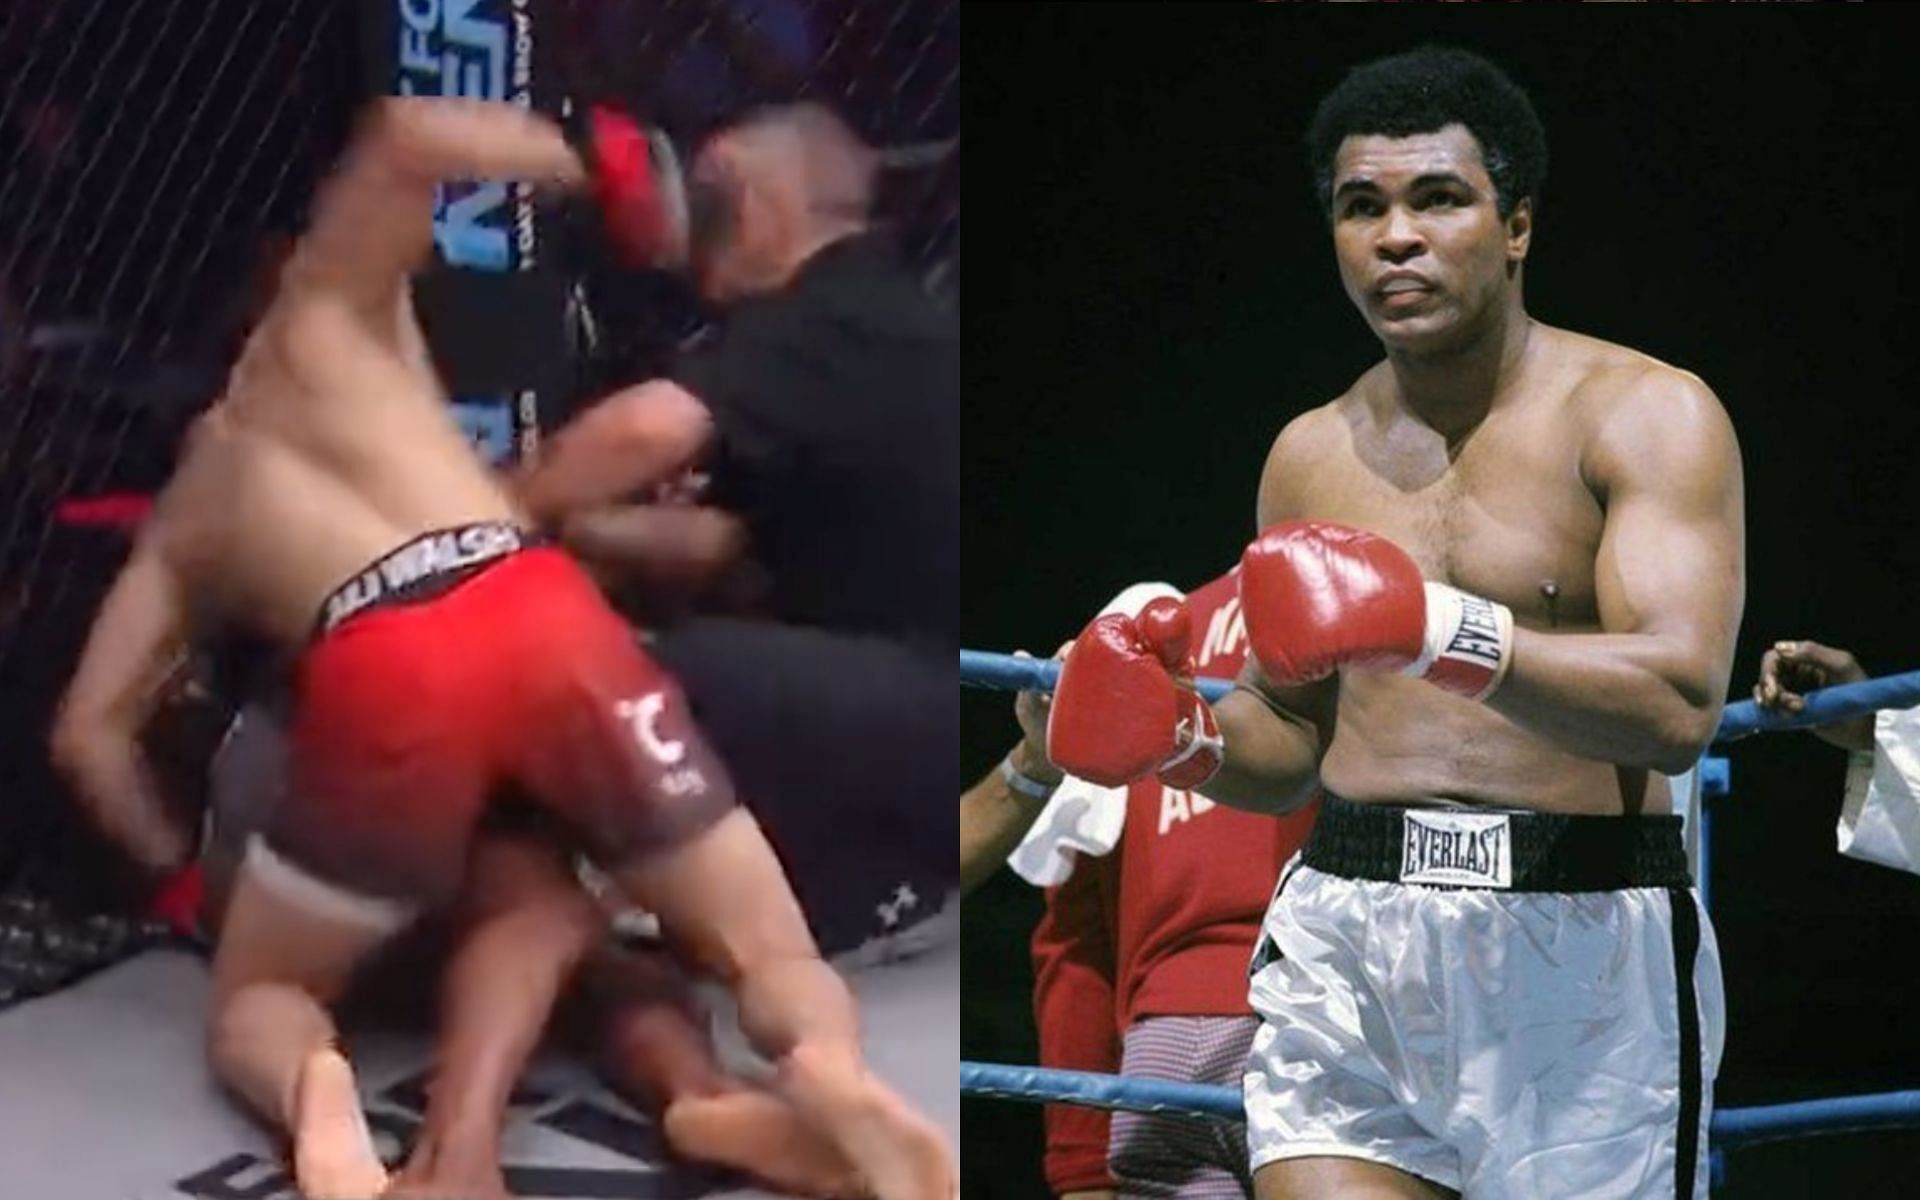 Biaggio Ali Walsh vs. Travell Miller (left) and Muhammad Ali (right) [Image credits: @PFLMMA on Twitter and @muhammadali on Instagram] 